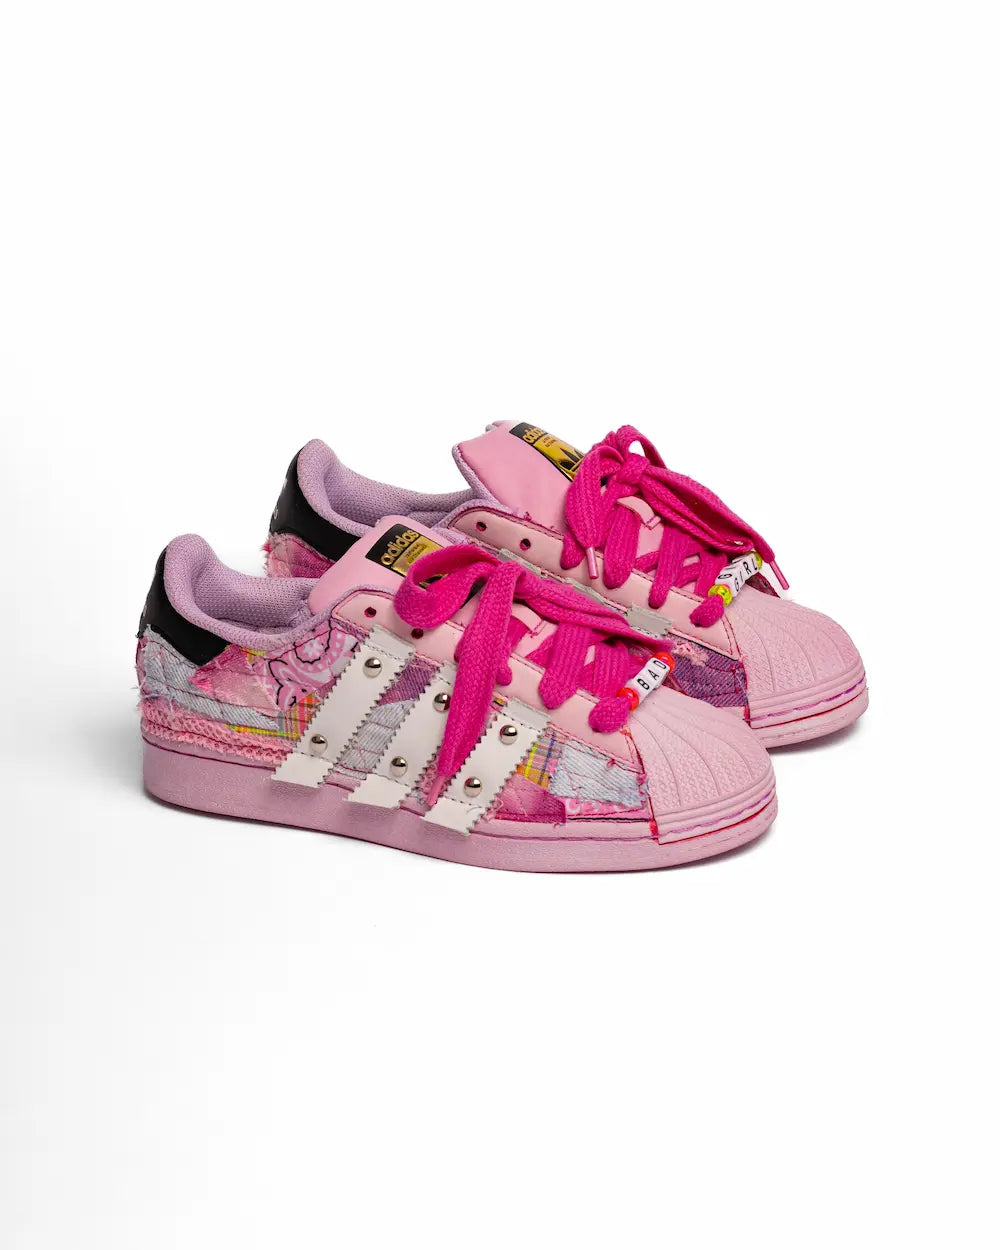 Adidas superstar custom modello Bad Girl, rosa con tessuti effetto patchwork